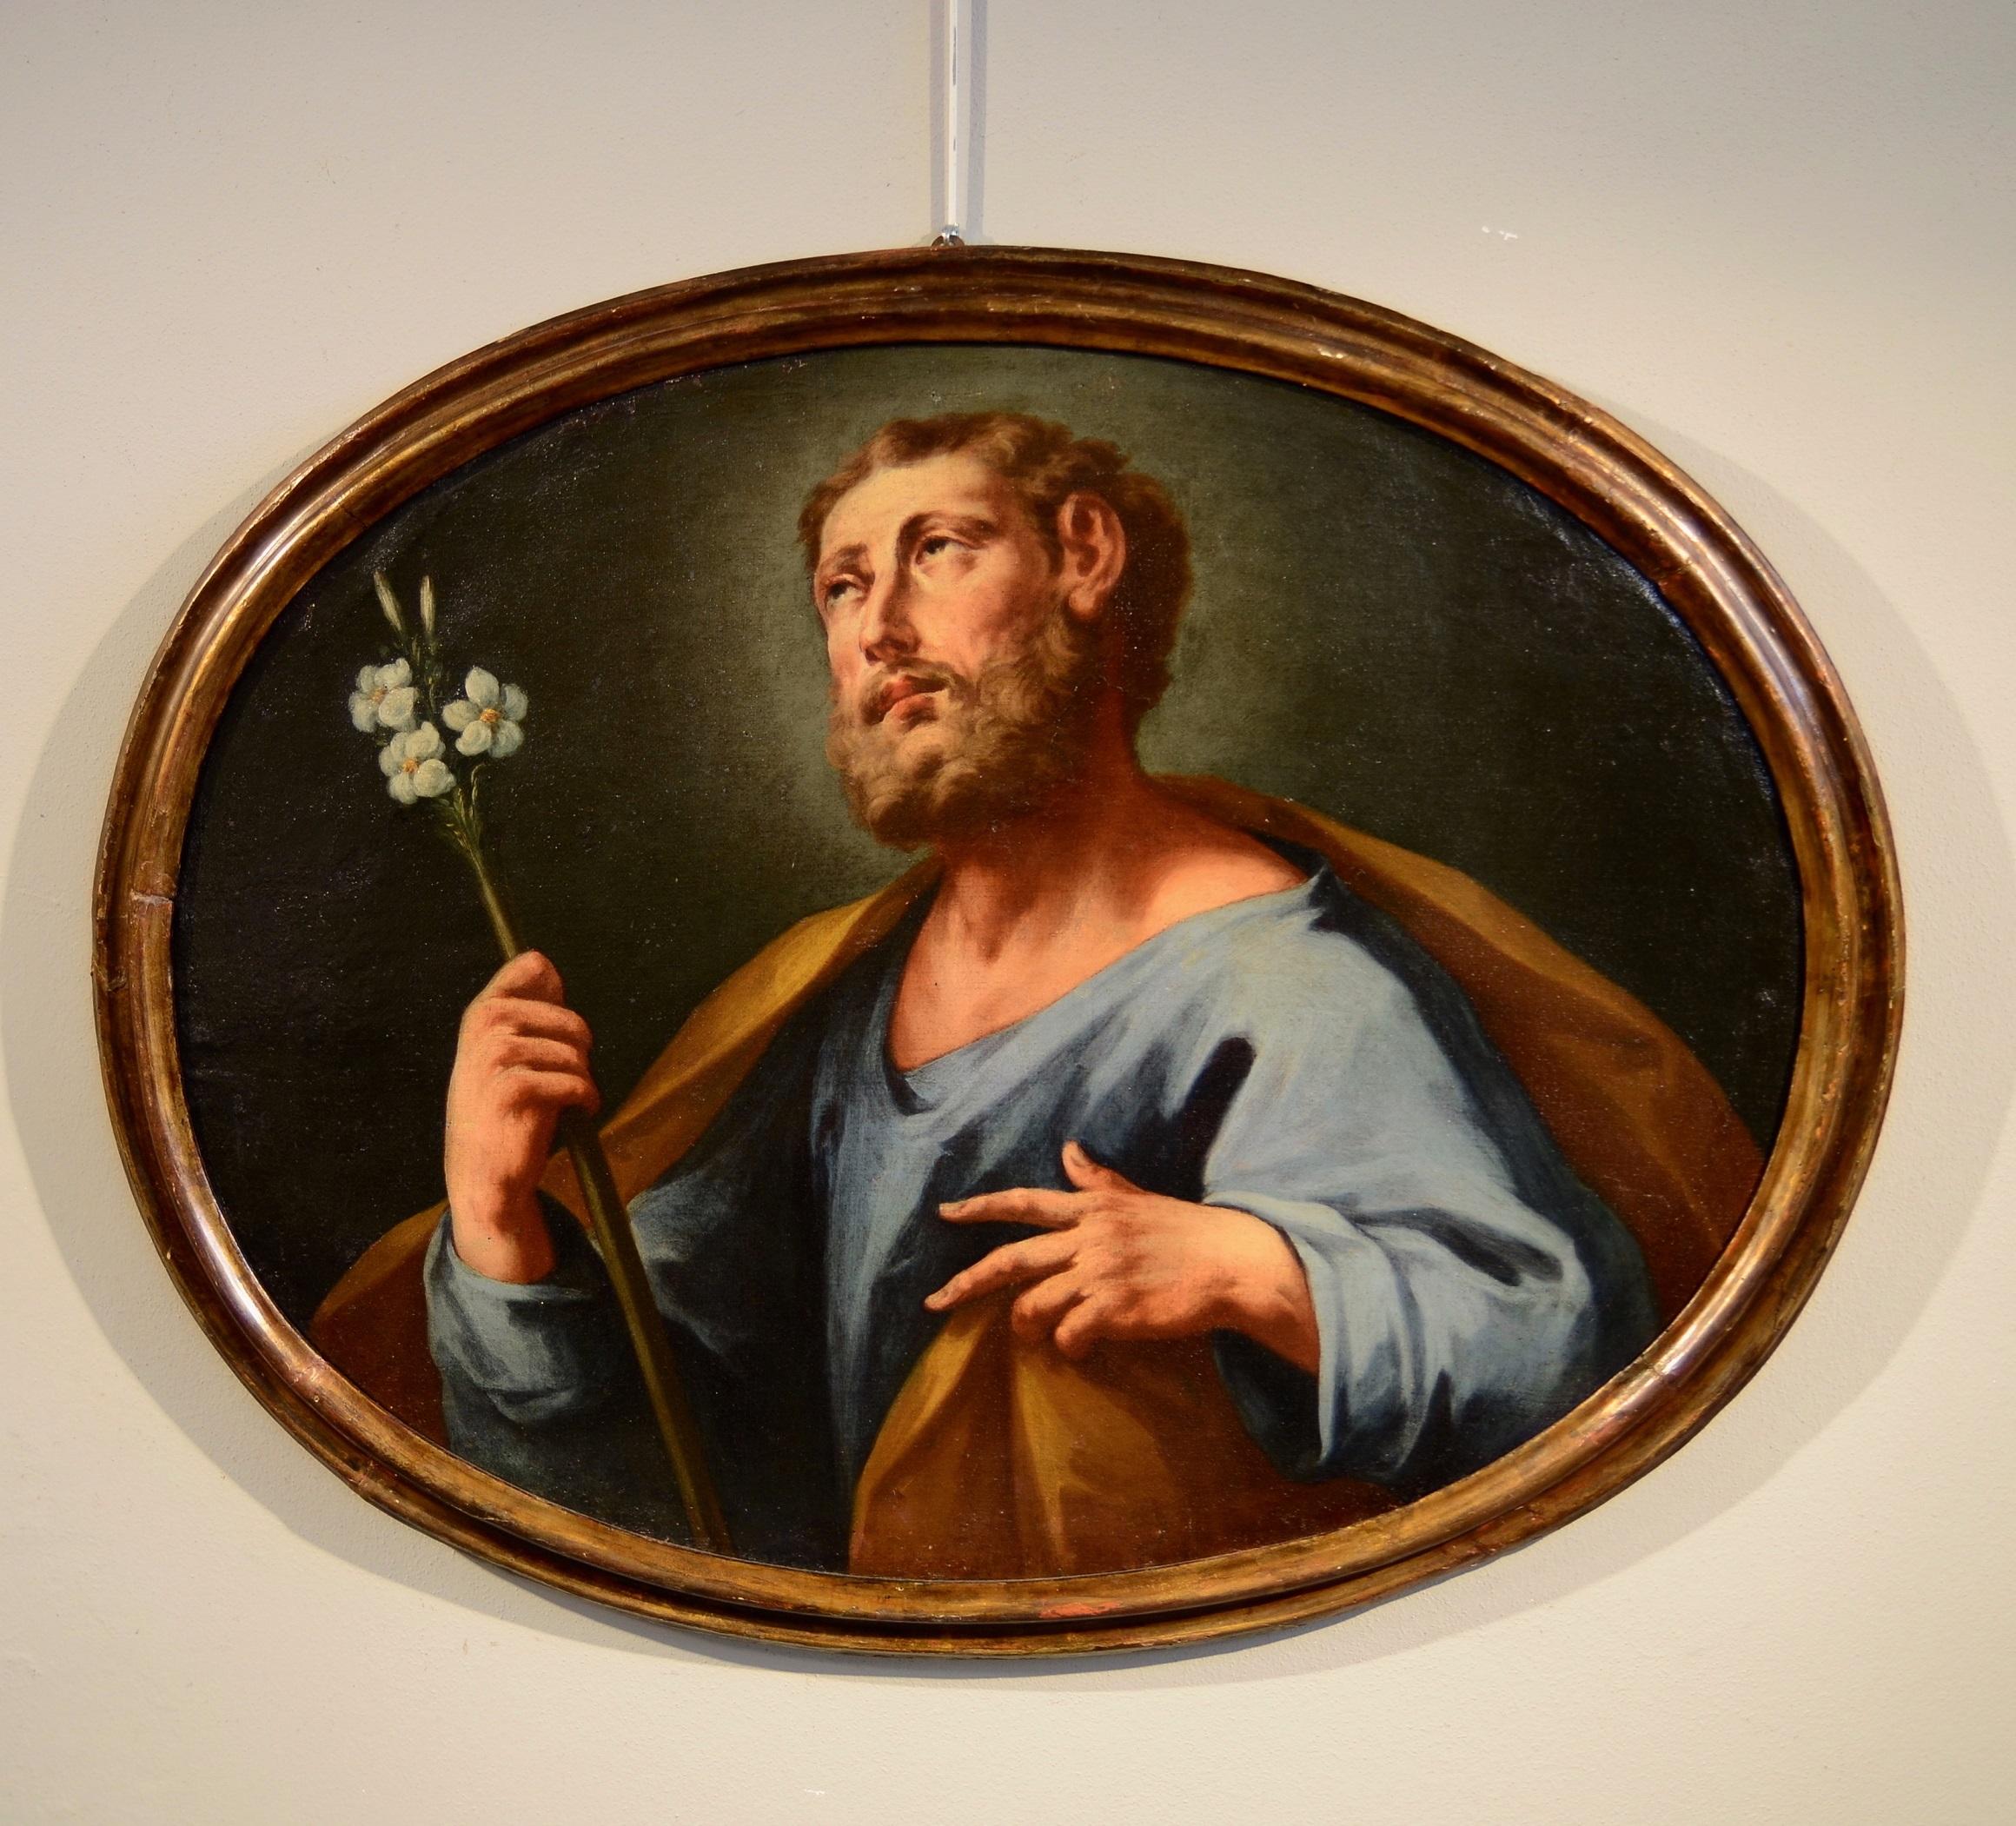 Saint Joseph Paint Oil on canvas De Mura Italy Baroque Art Quality 18th Century - Painting by École napolitaine du XVIIIe siècle